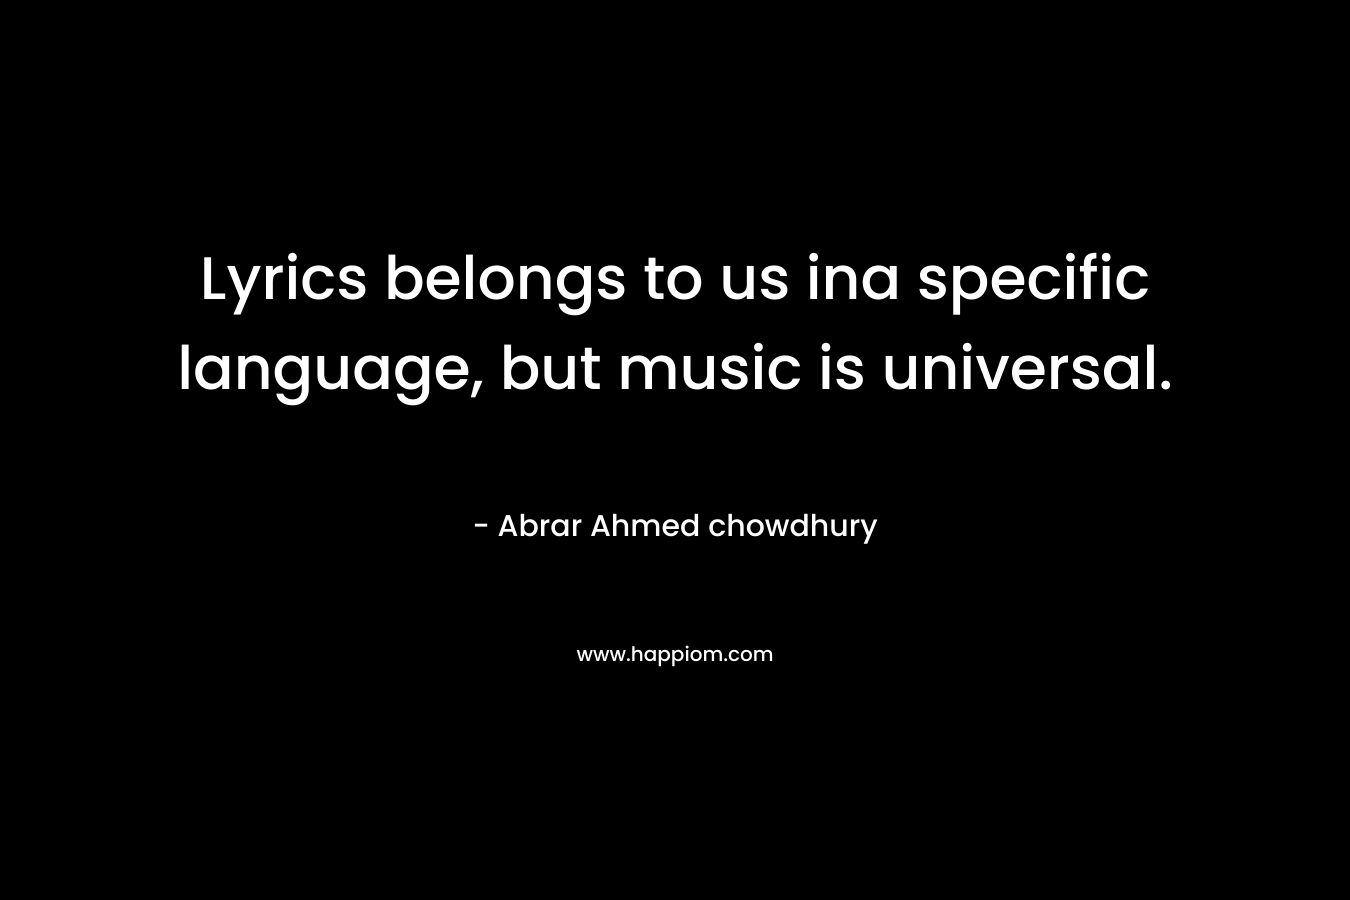  Lyrics belongs to us ina specific language, but music is universal.